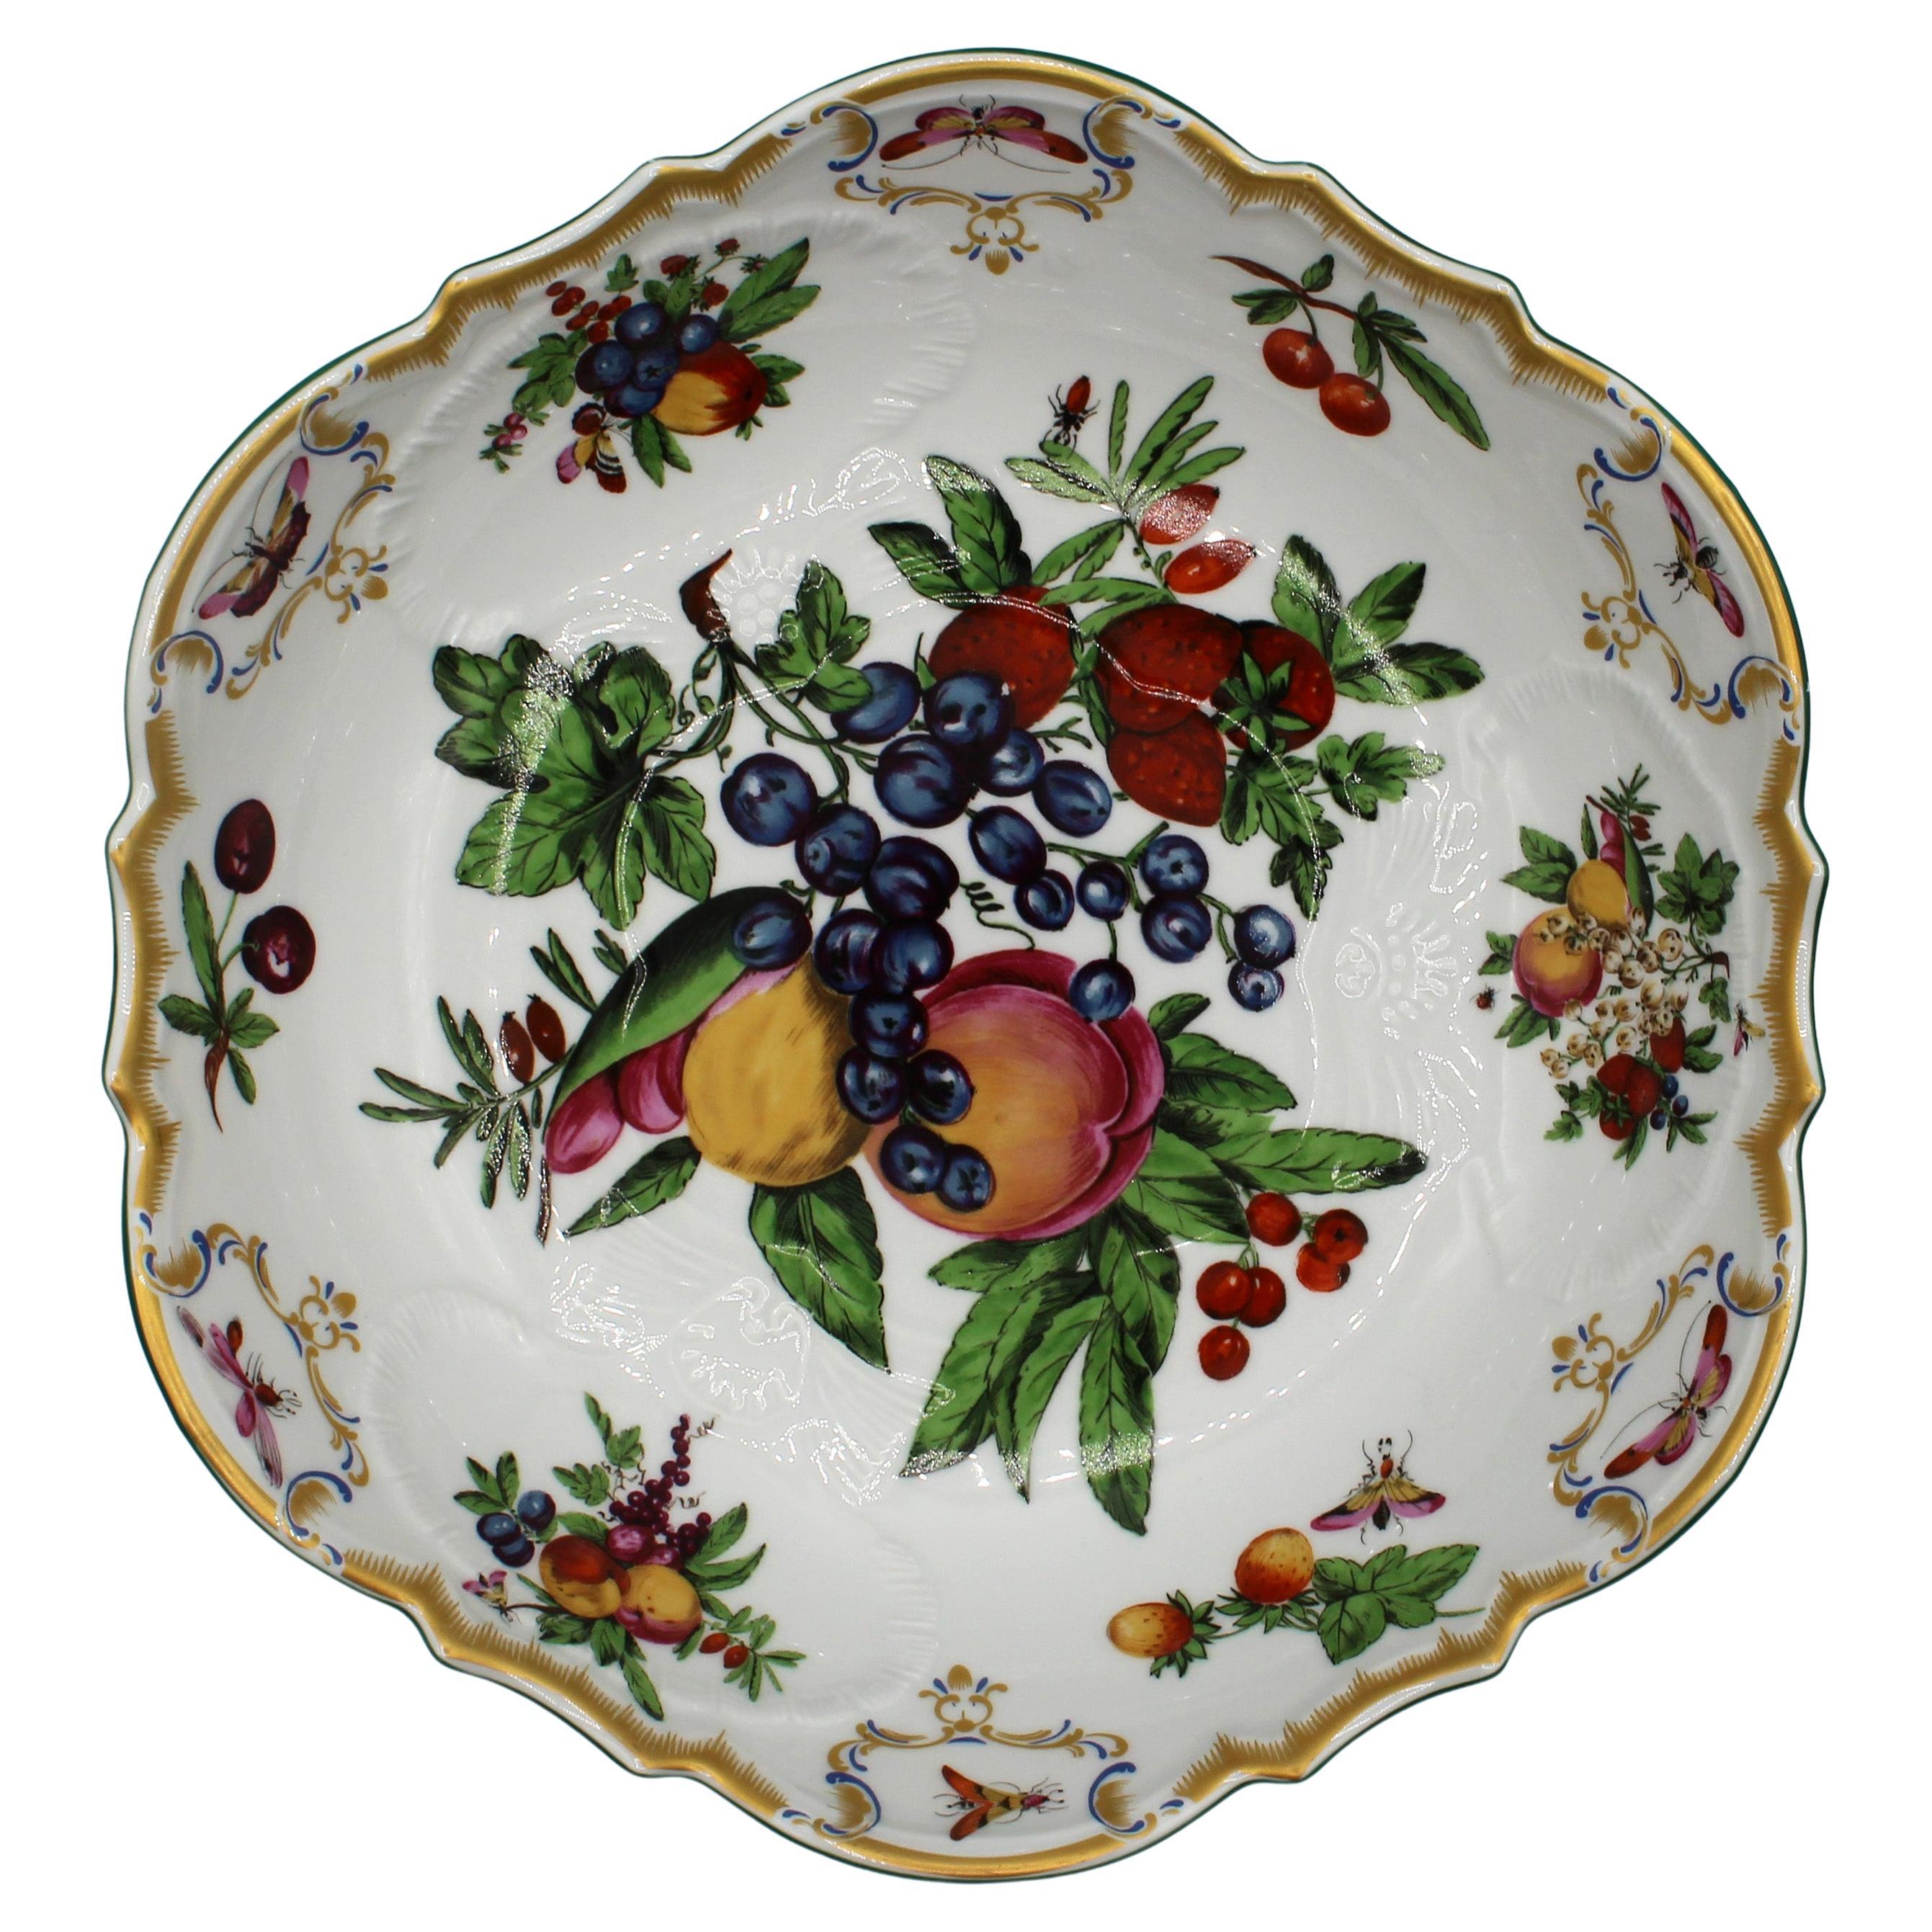 A "Duke of Gloucester" Pattern Porcelain Salad Bowl, circa 2000, by Mottahedeh